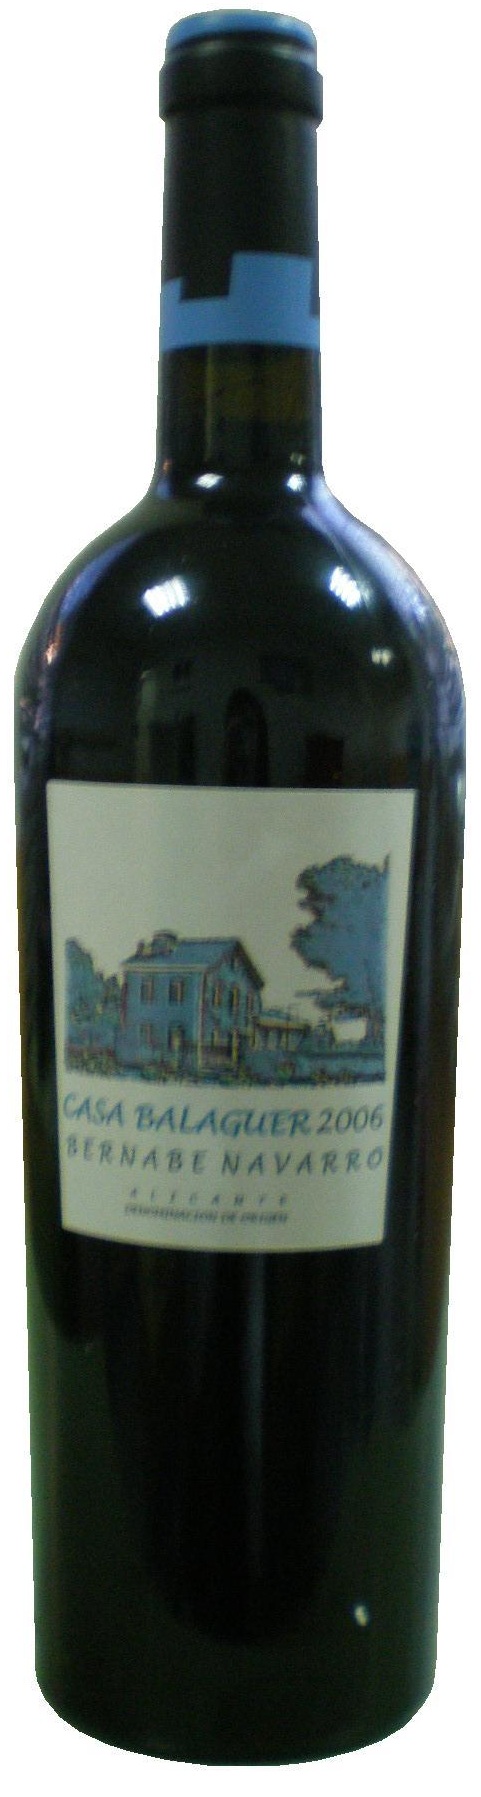 Imagen de la botella de Vino Casa Balaguer 2008